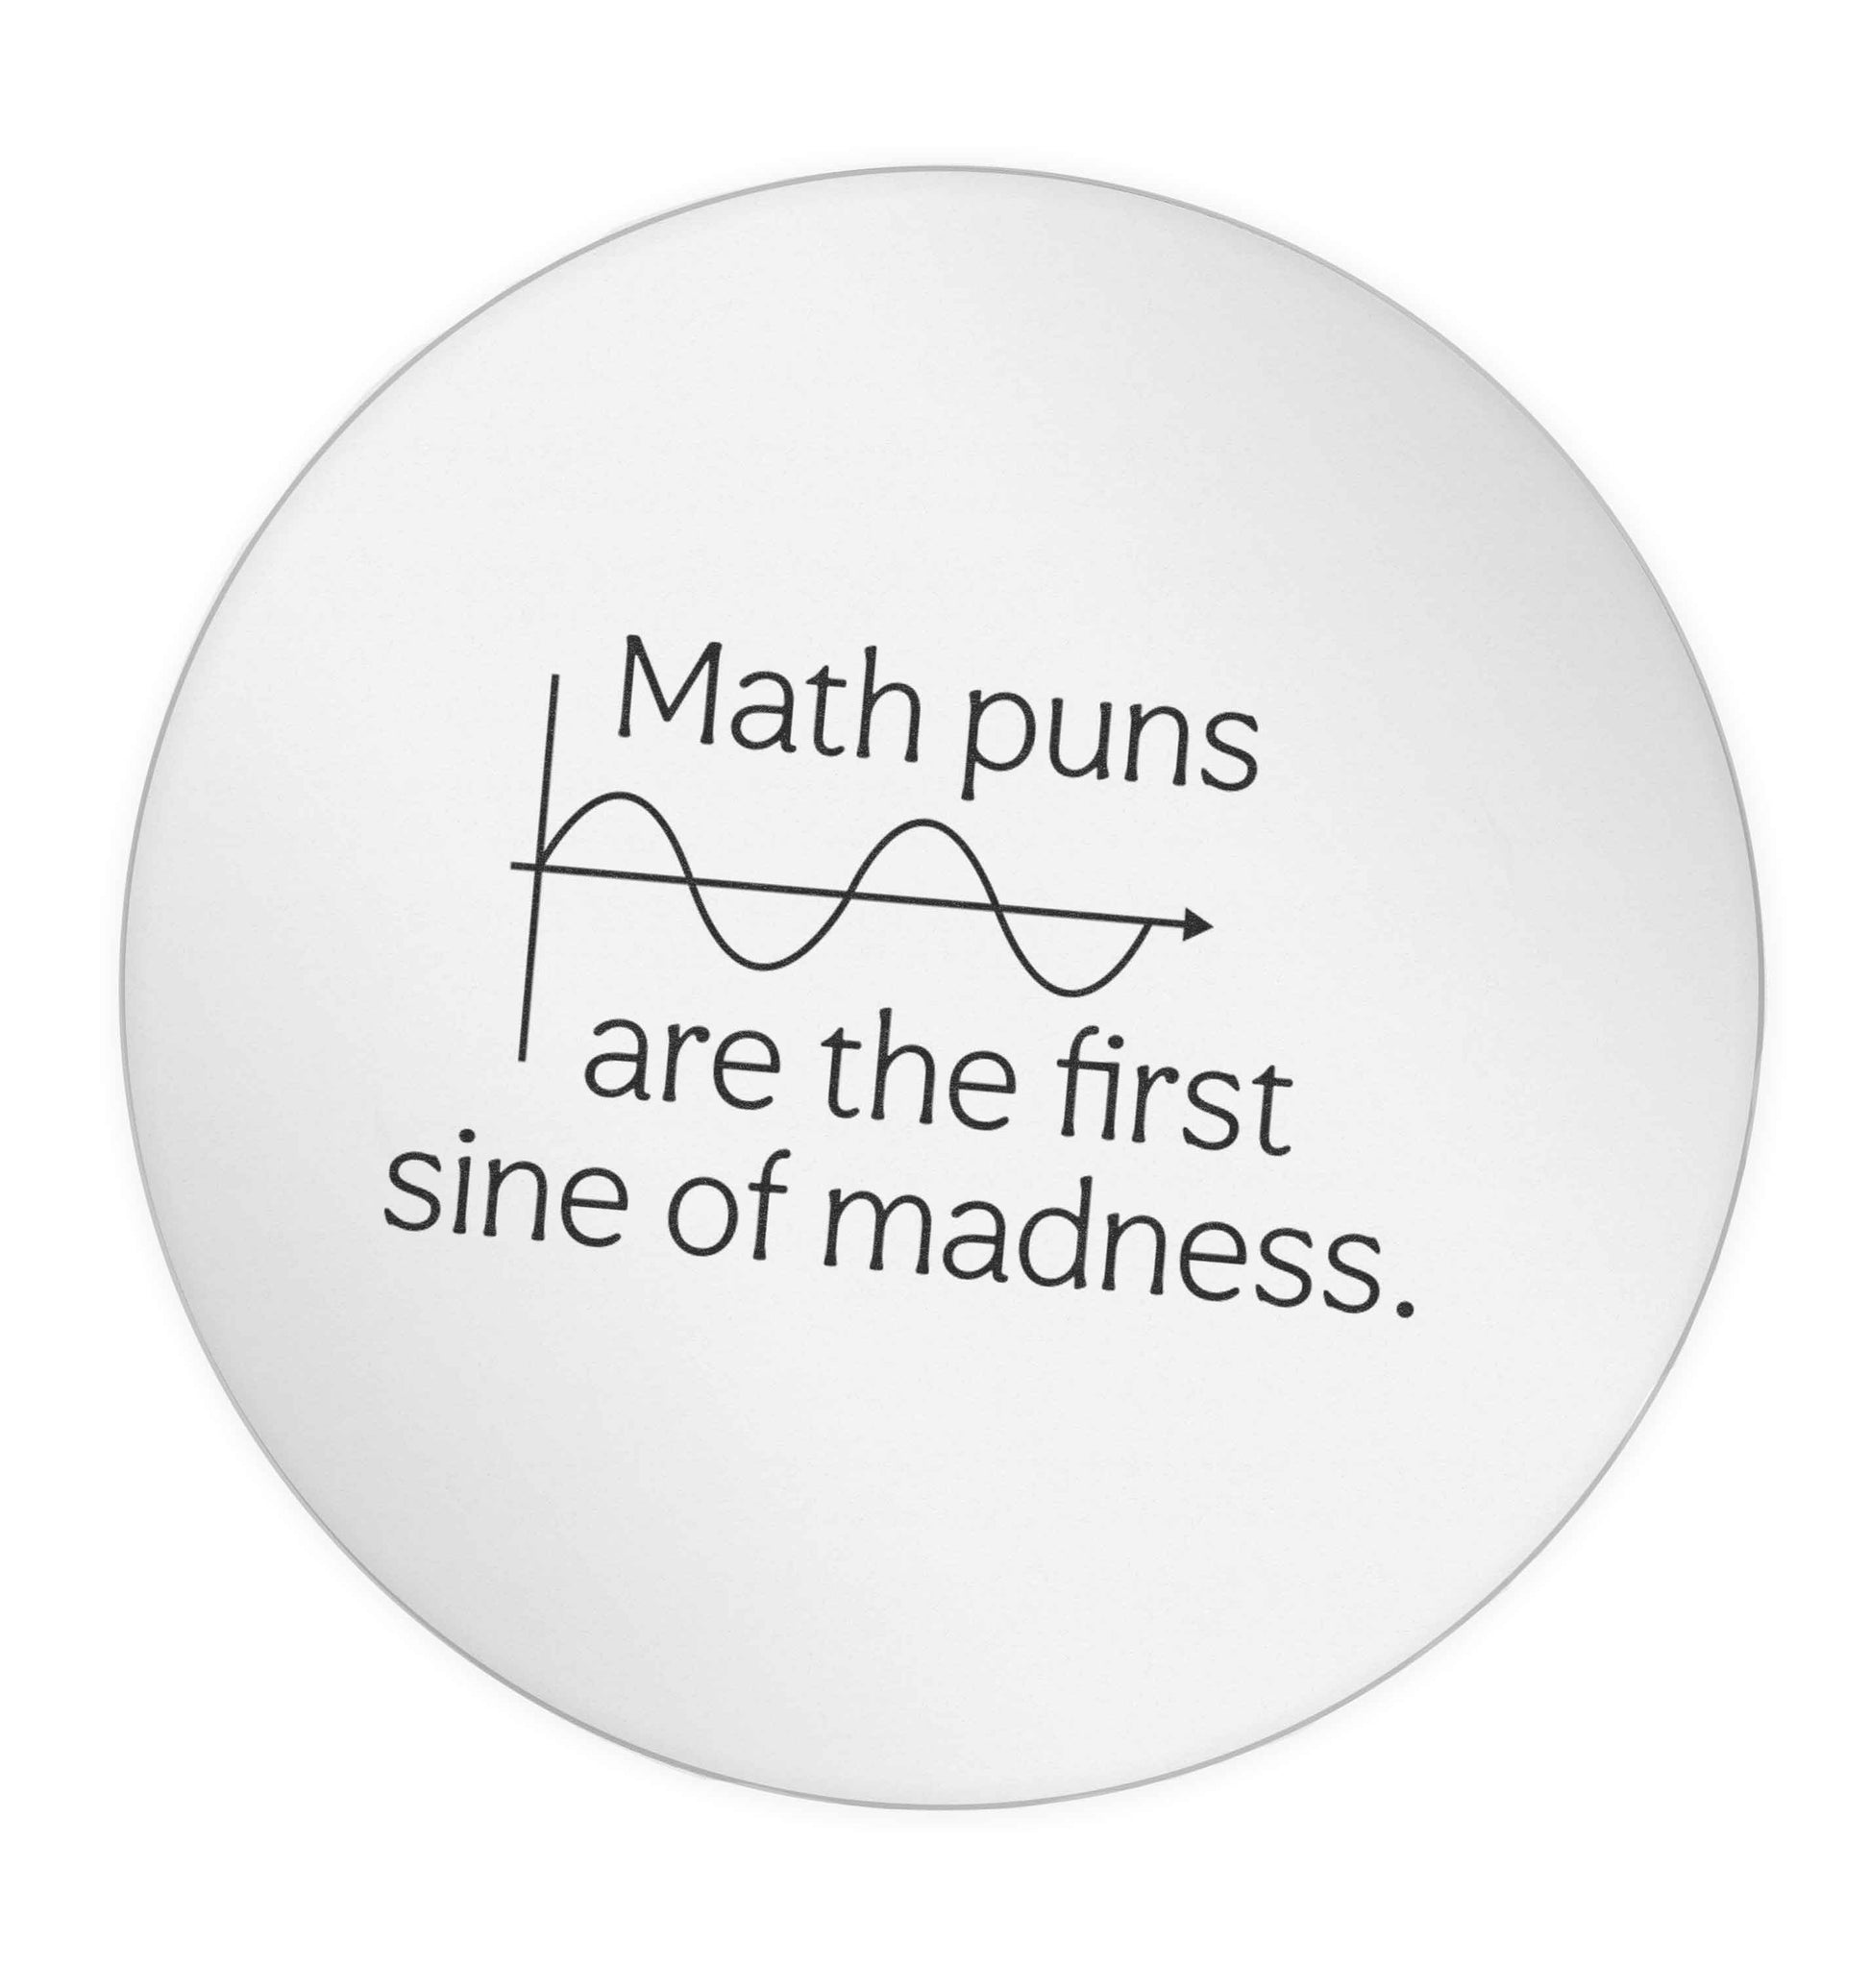 Math puns are the first sine of madness 24 @ 45mm matt circle stickers